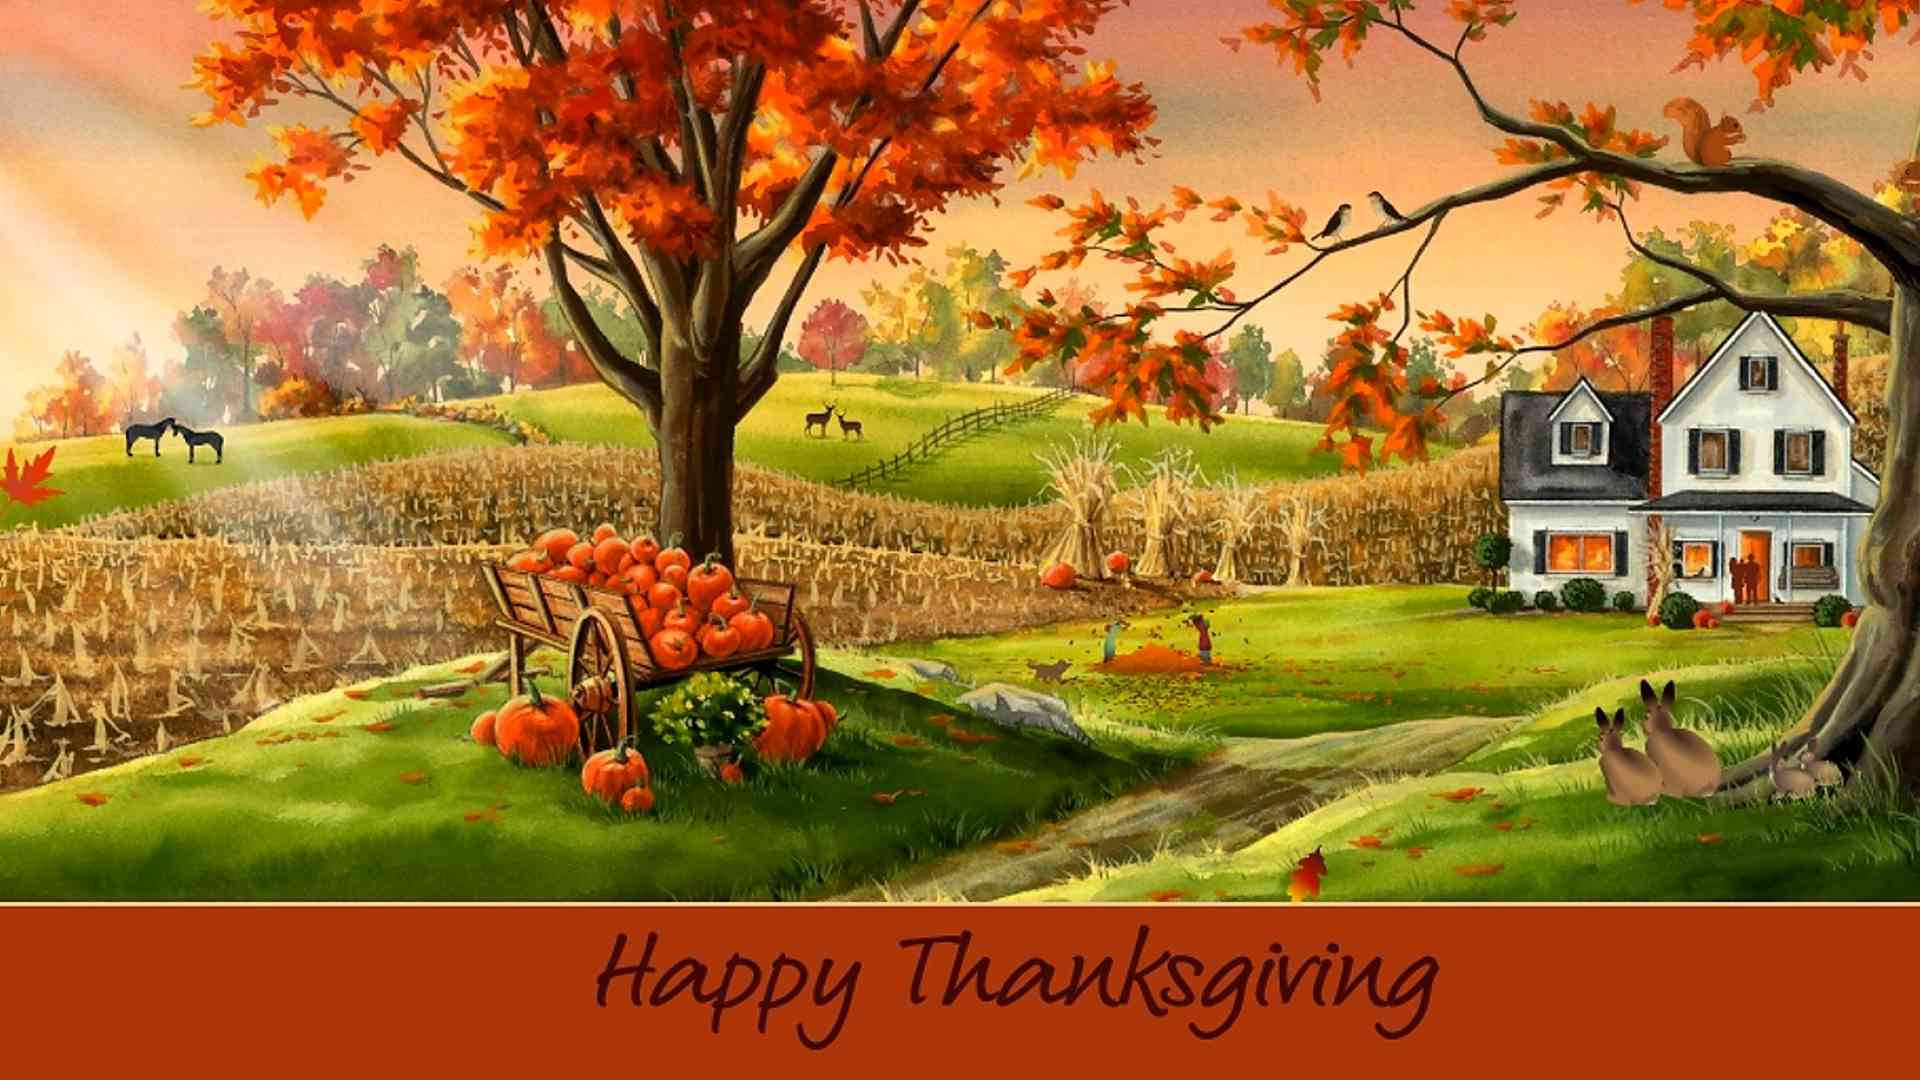 Happy Thanksgiving Wallpaper - NawPic